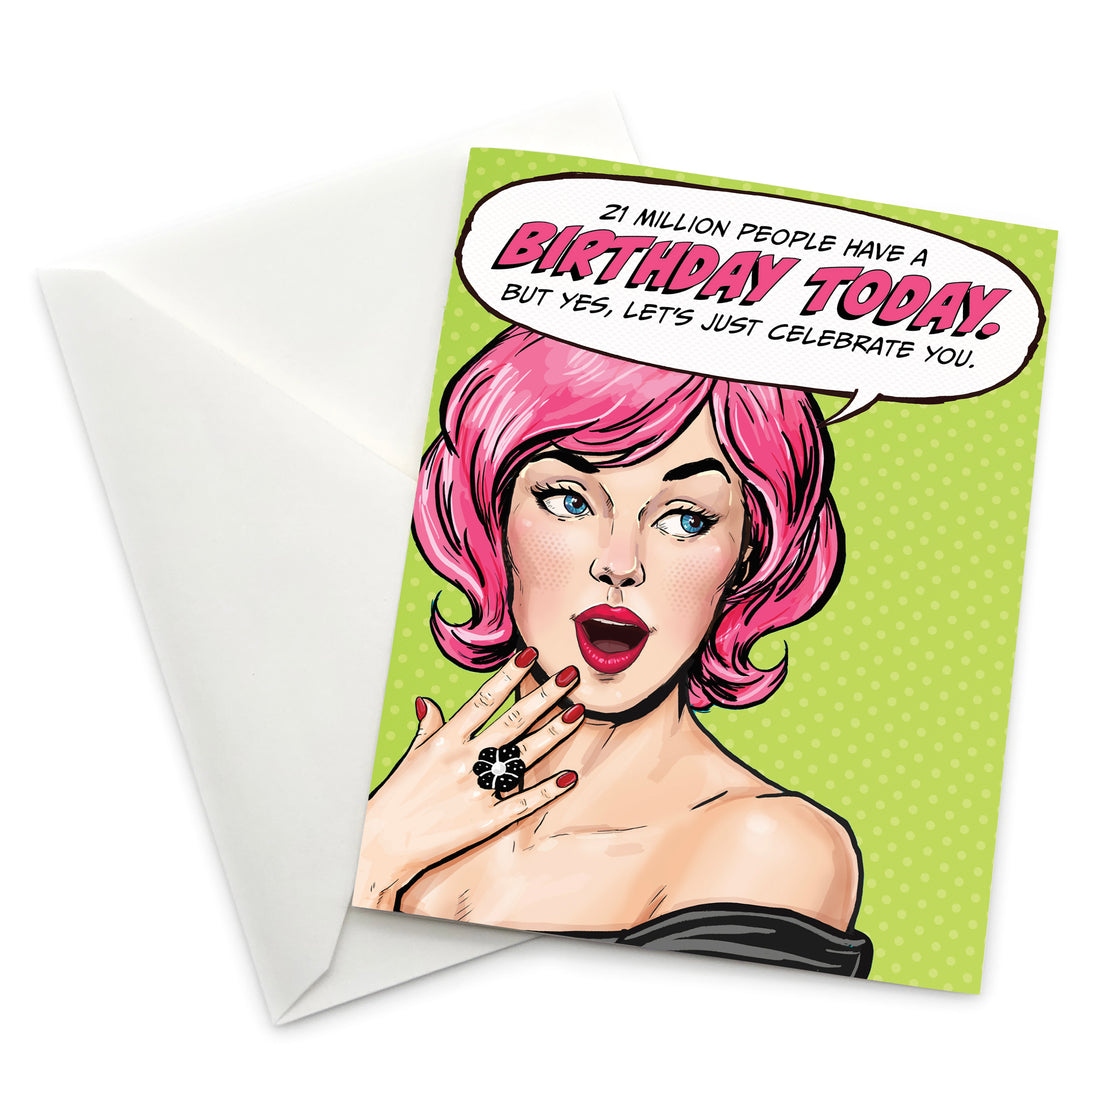 Pop Life Satirical Birthday Card - 21 Million People Have a Birthdays Today